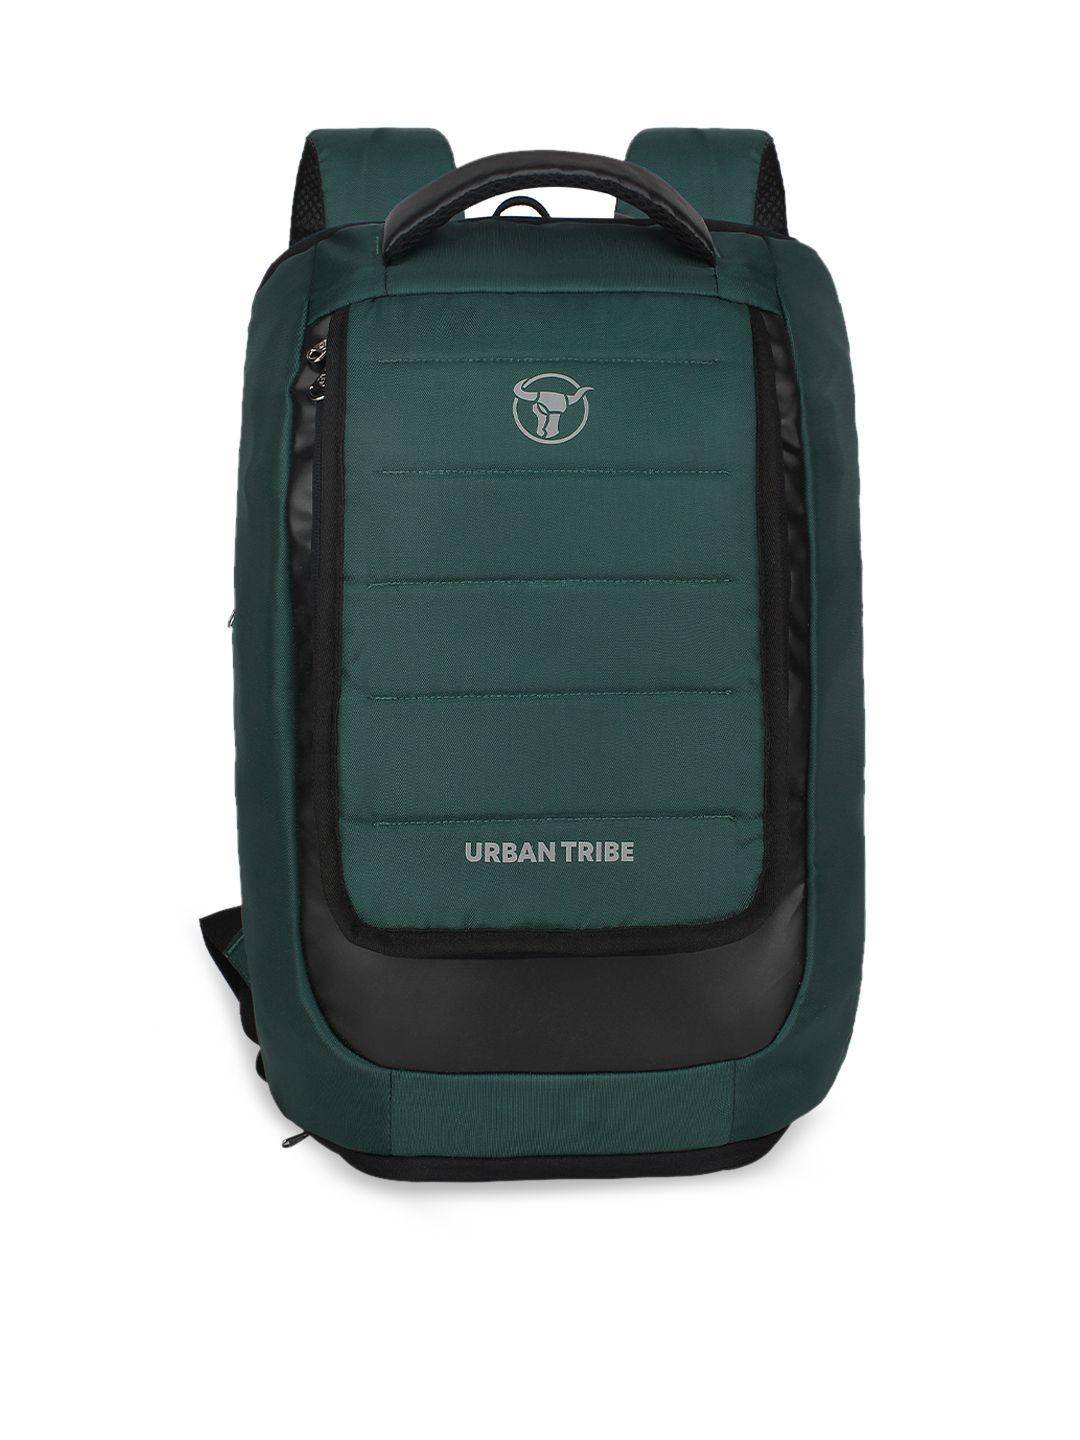 urban tribe unisex teal green & black backpack